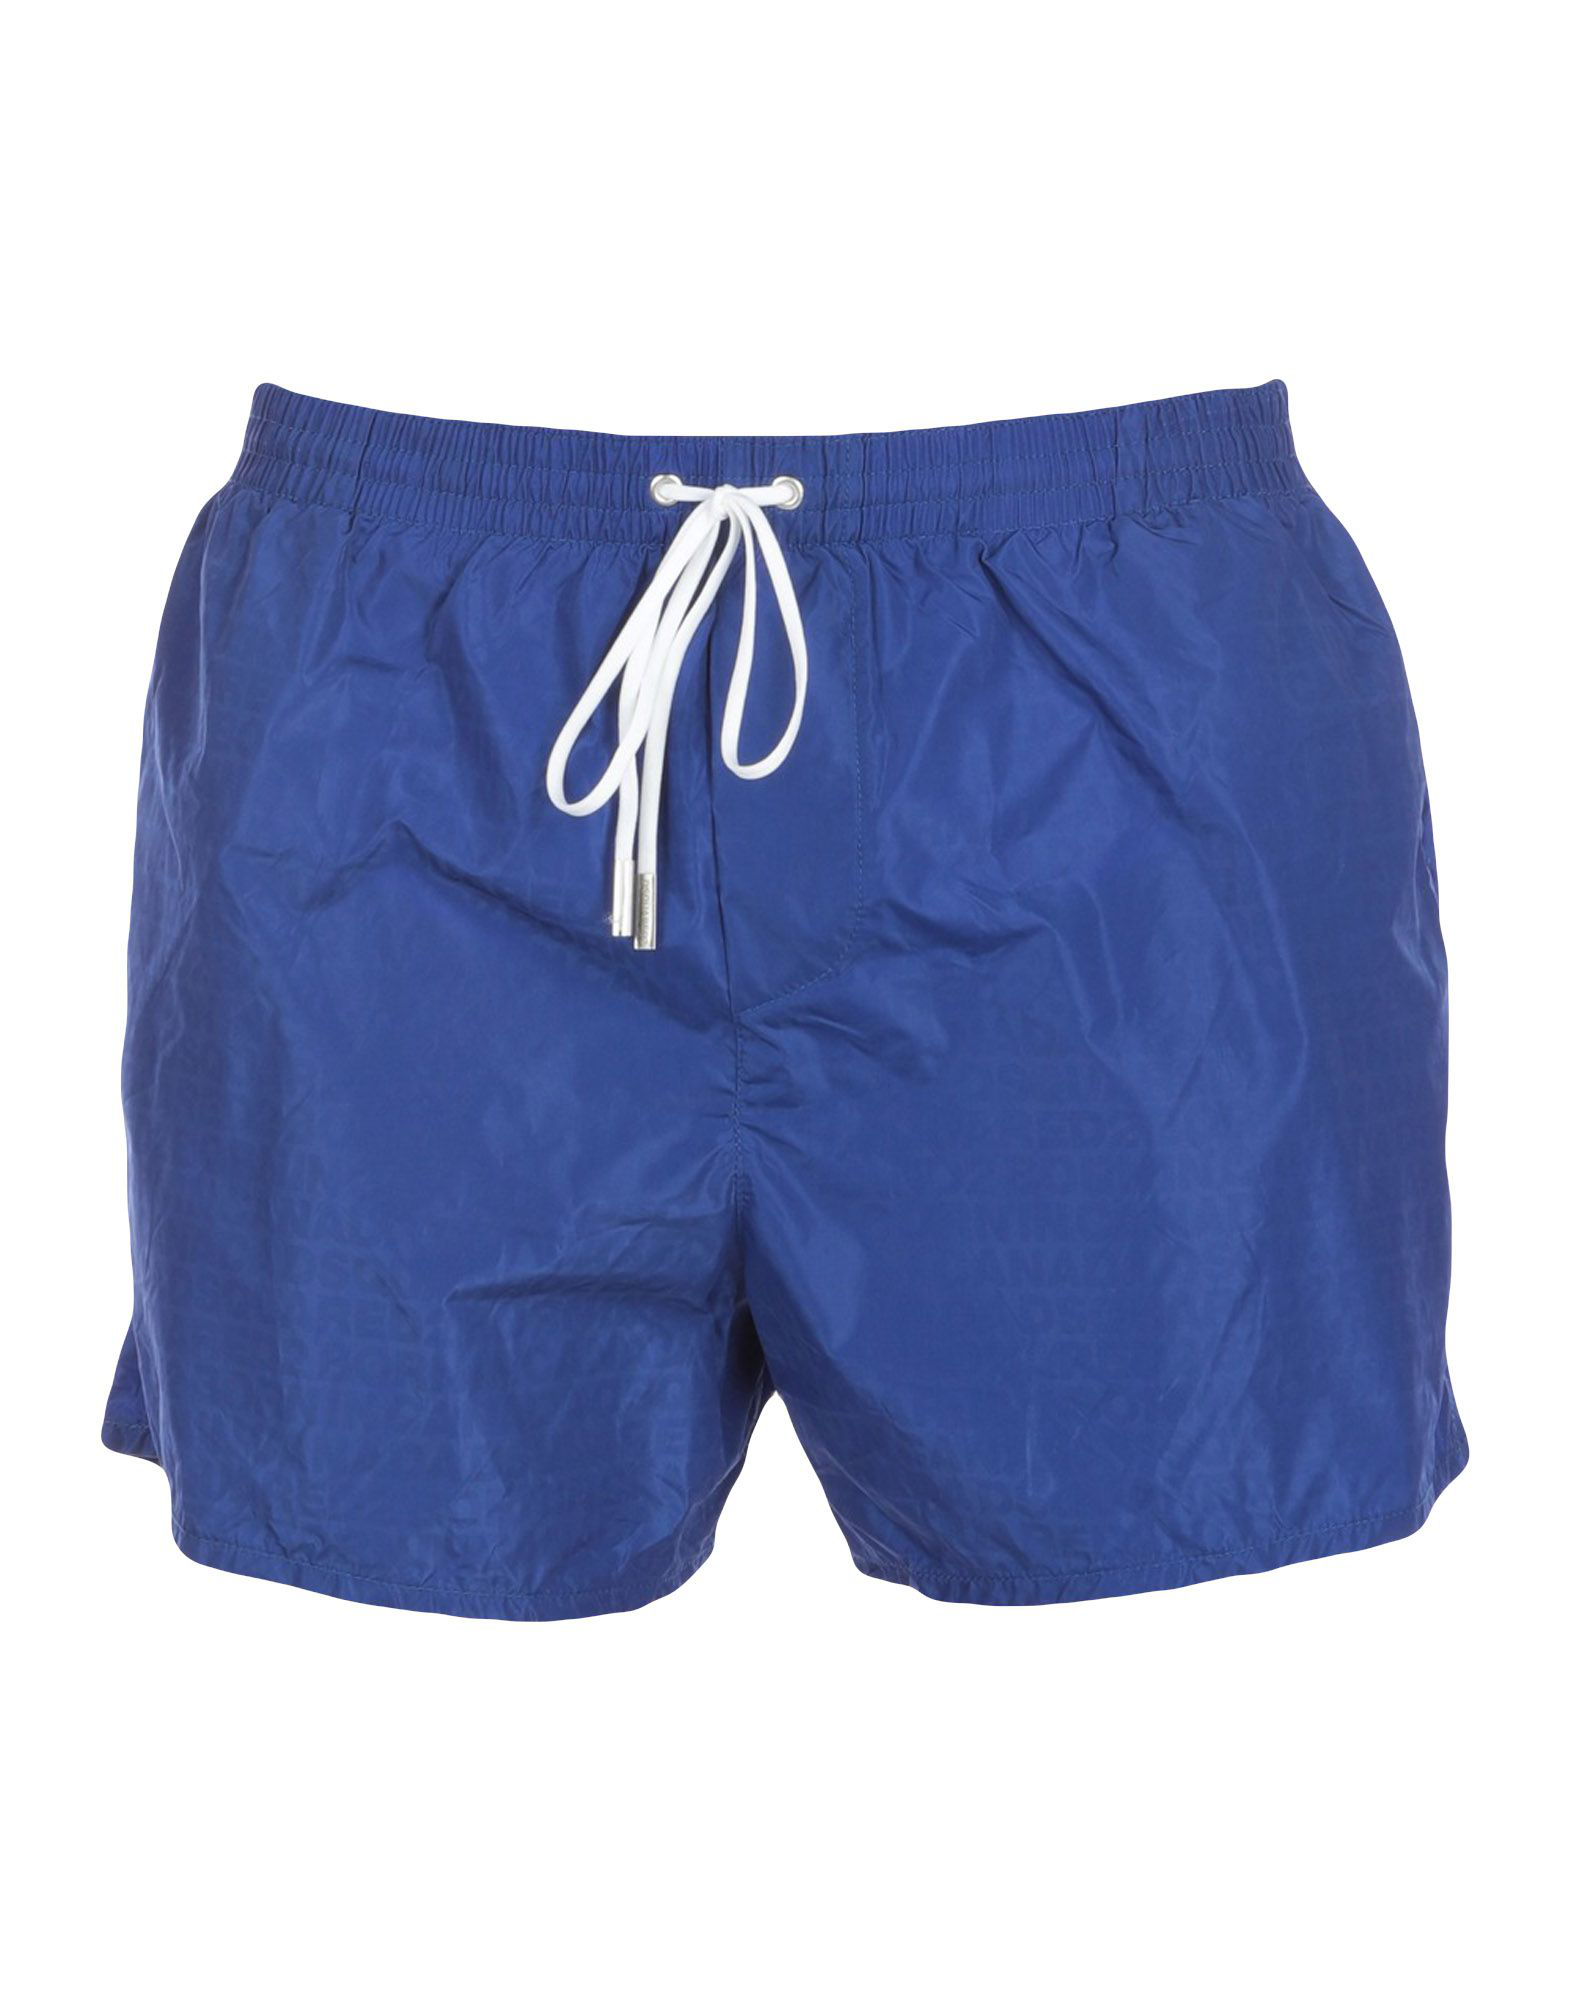 dsquared swim shorts sale